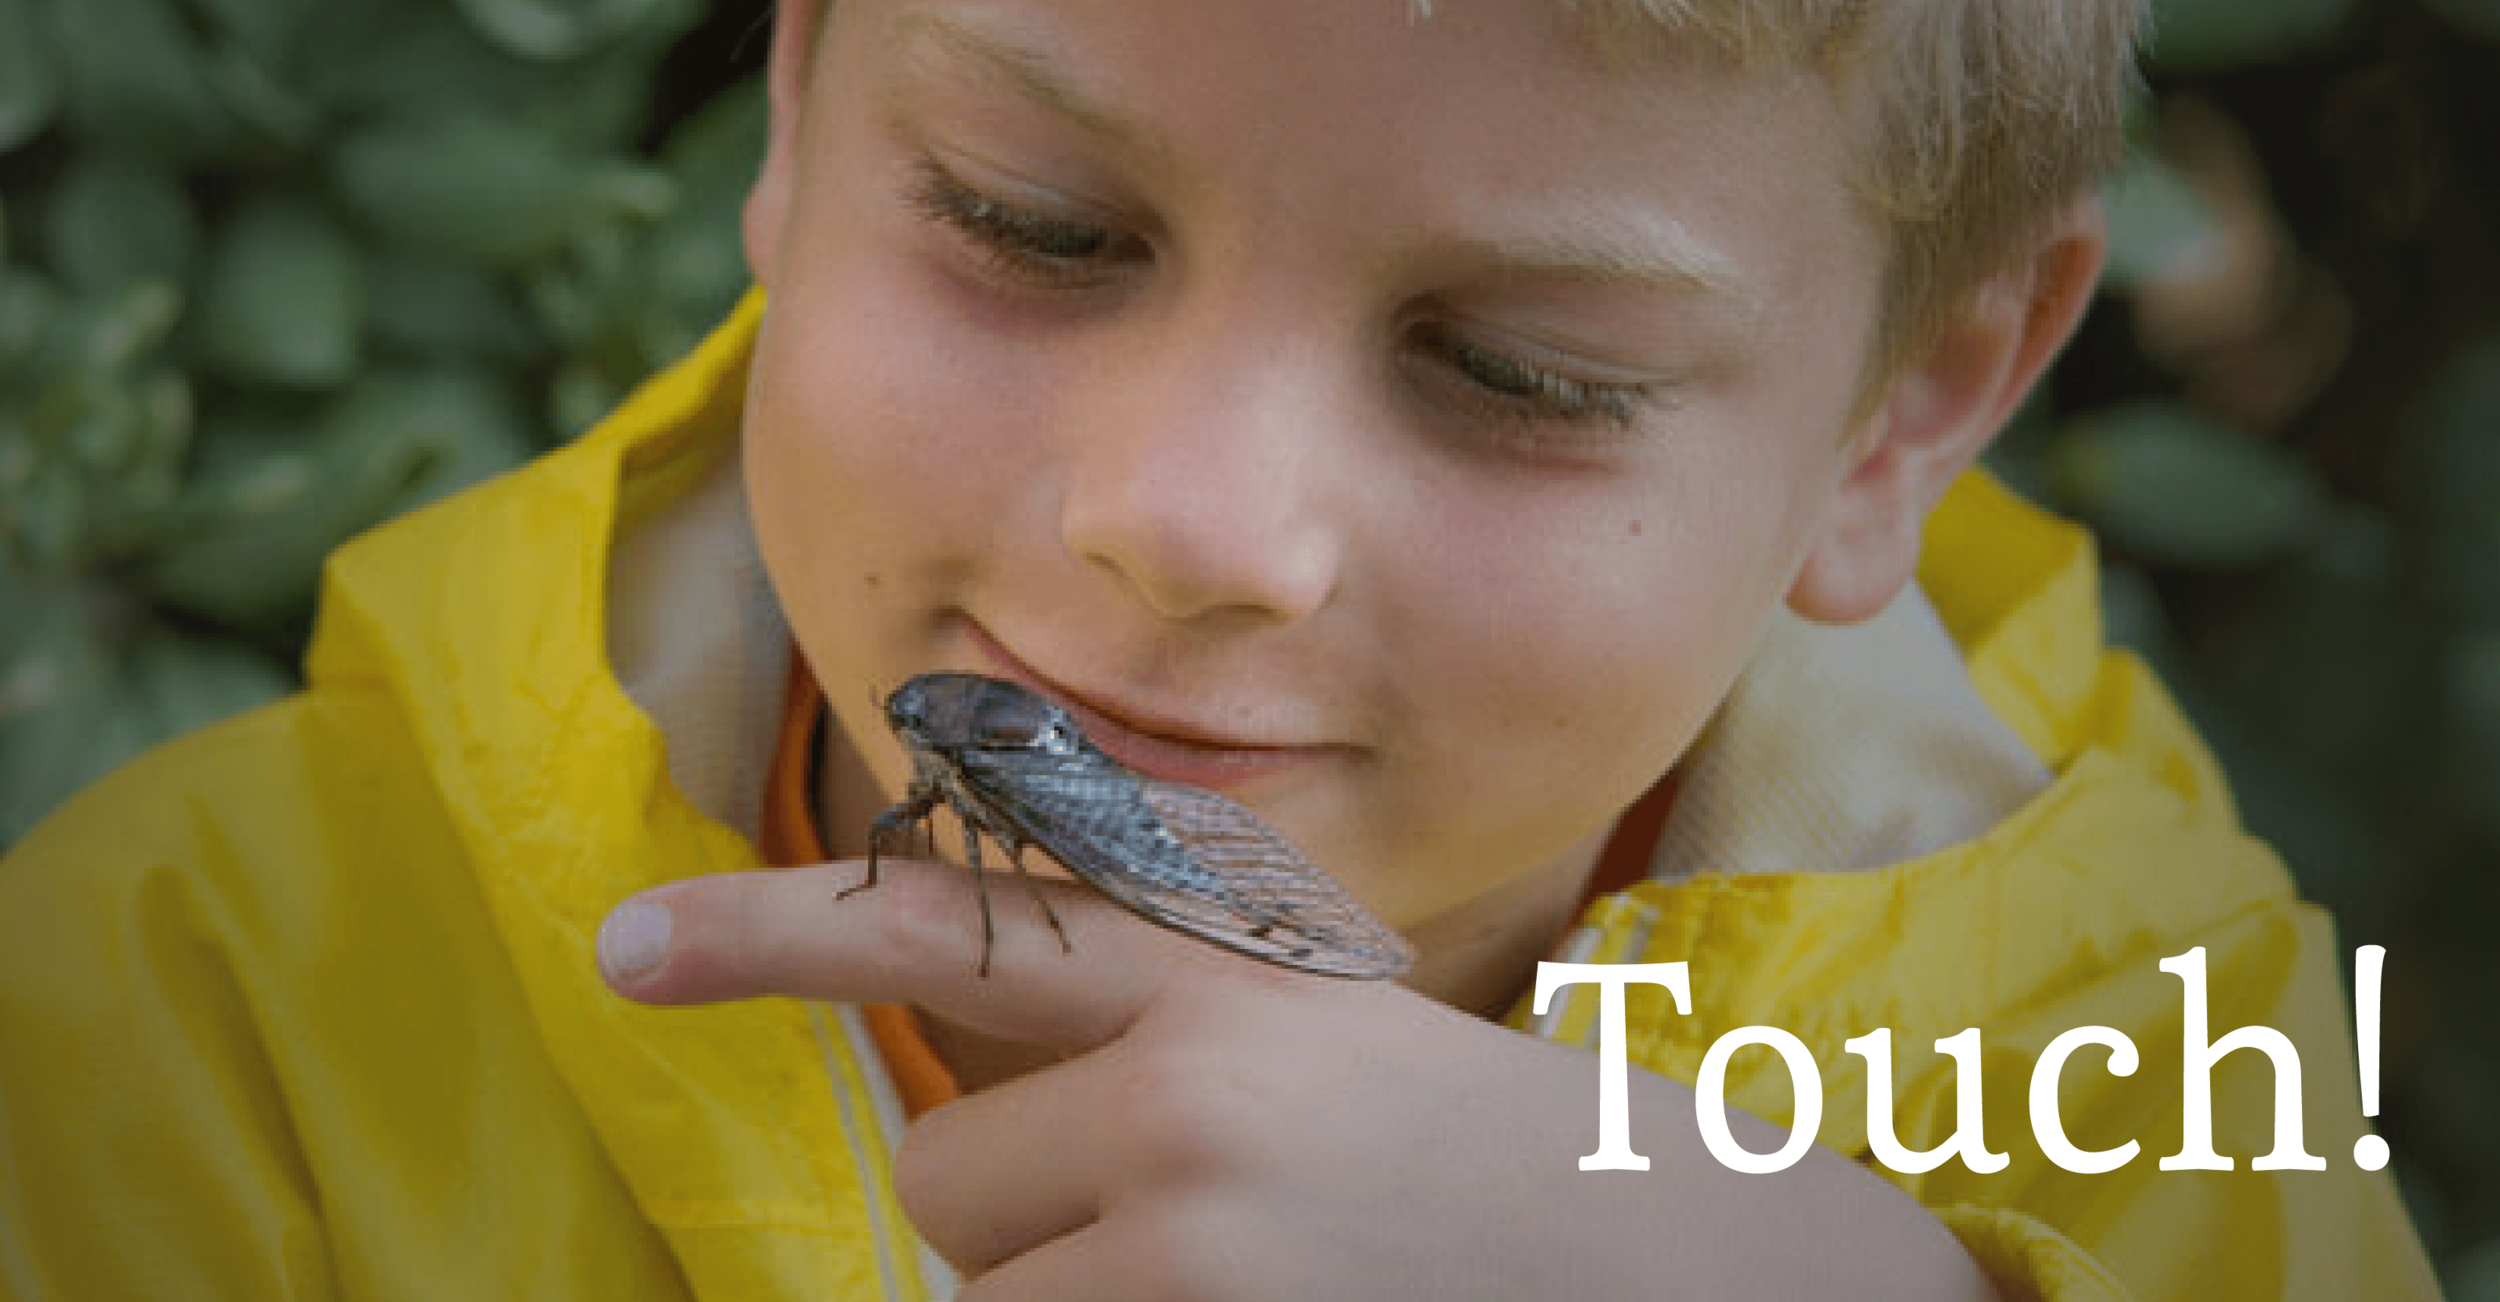 A boy looks at a cicada